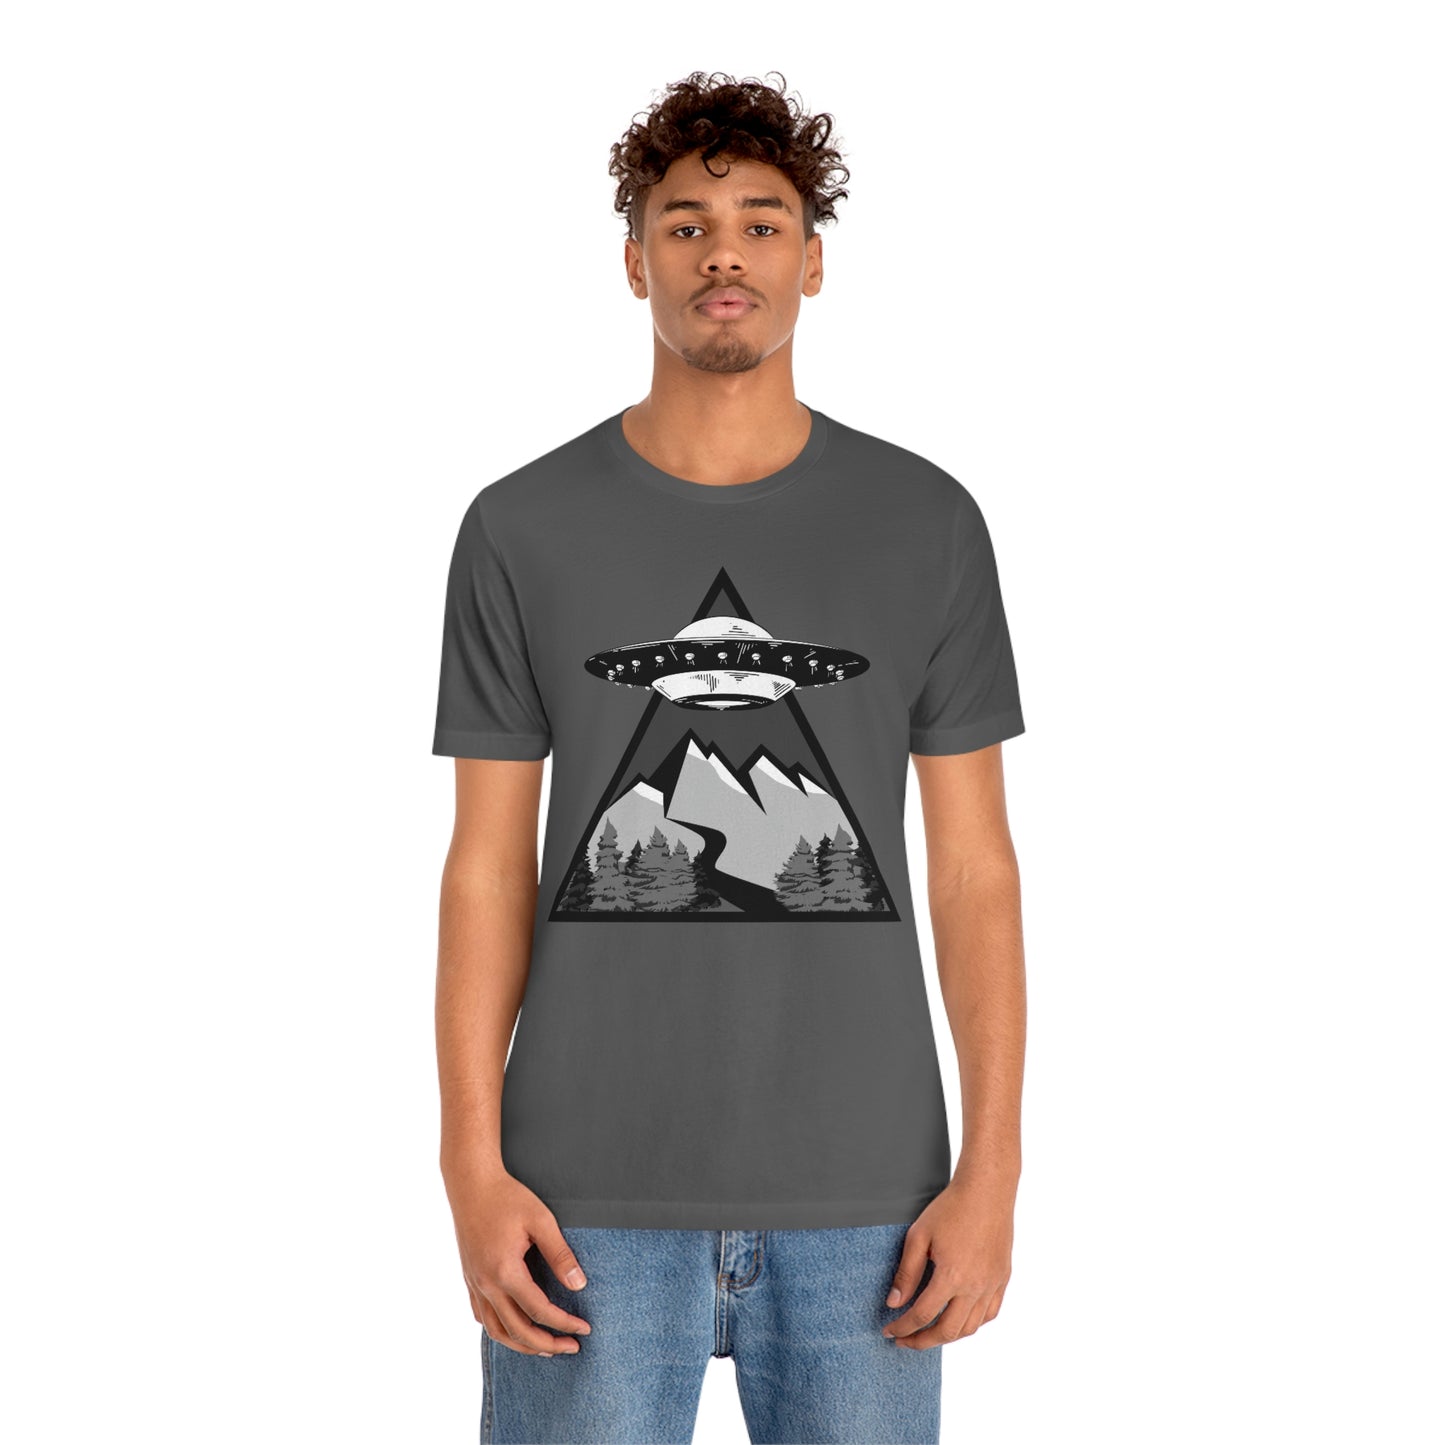 UFO Mountain Forest Scene Shirt Super Soft Tshirt